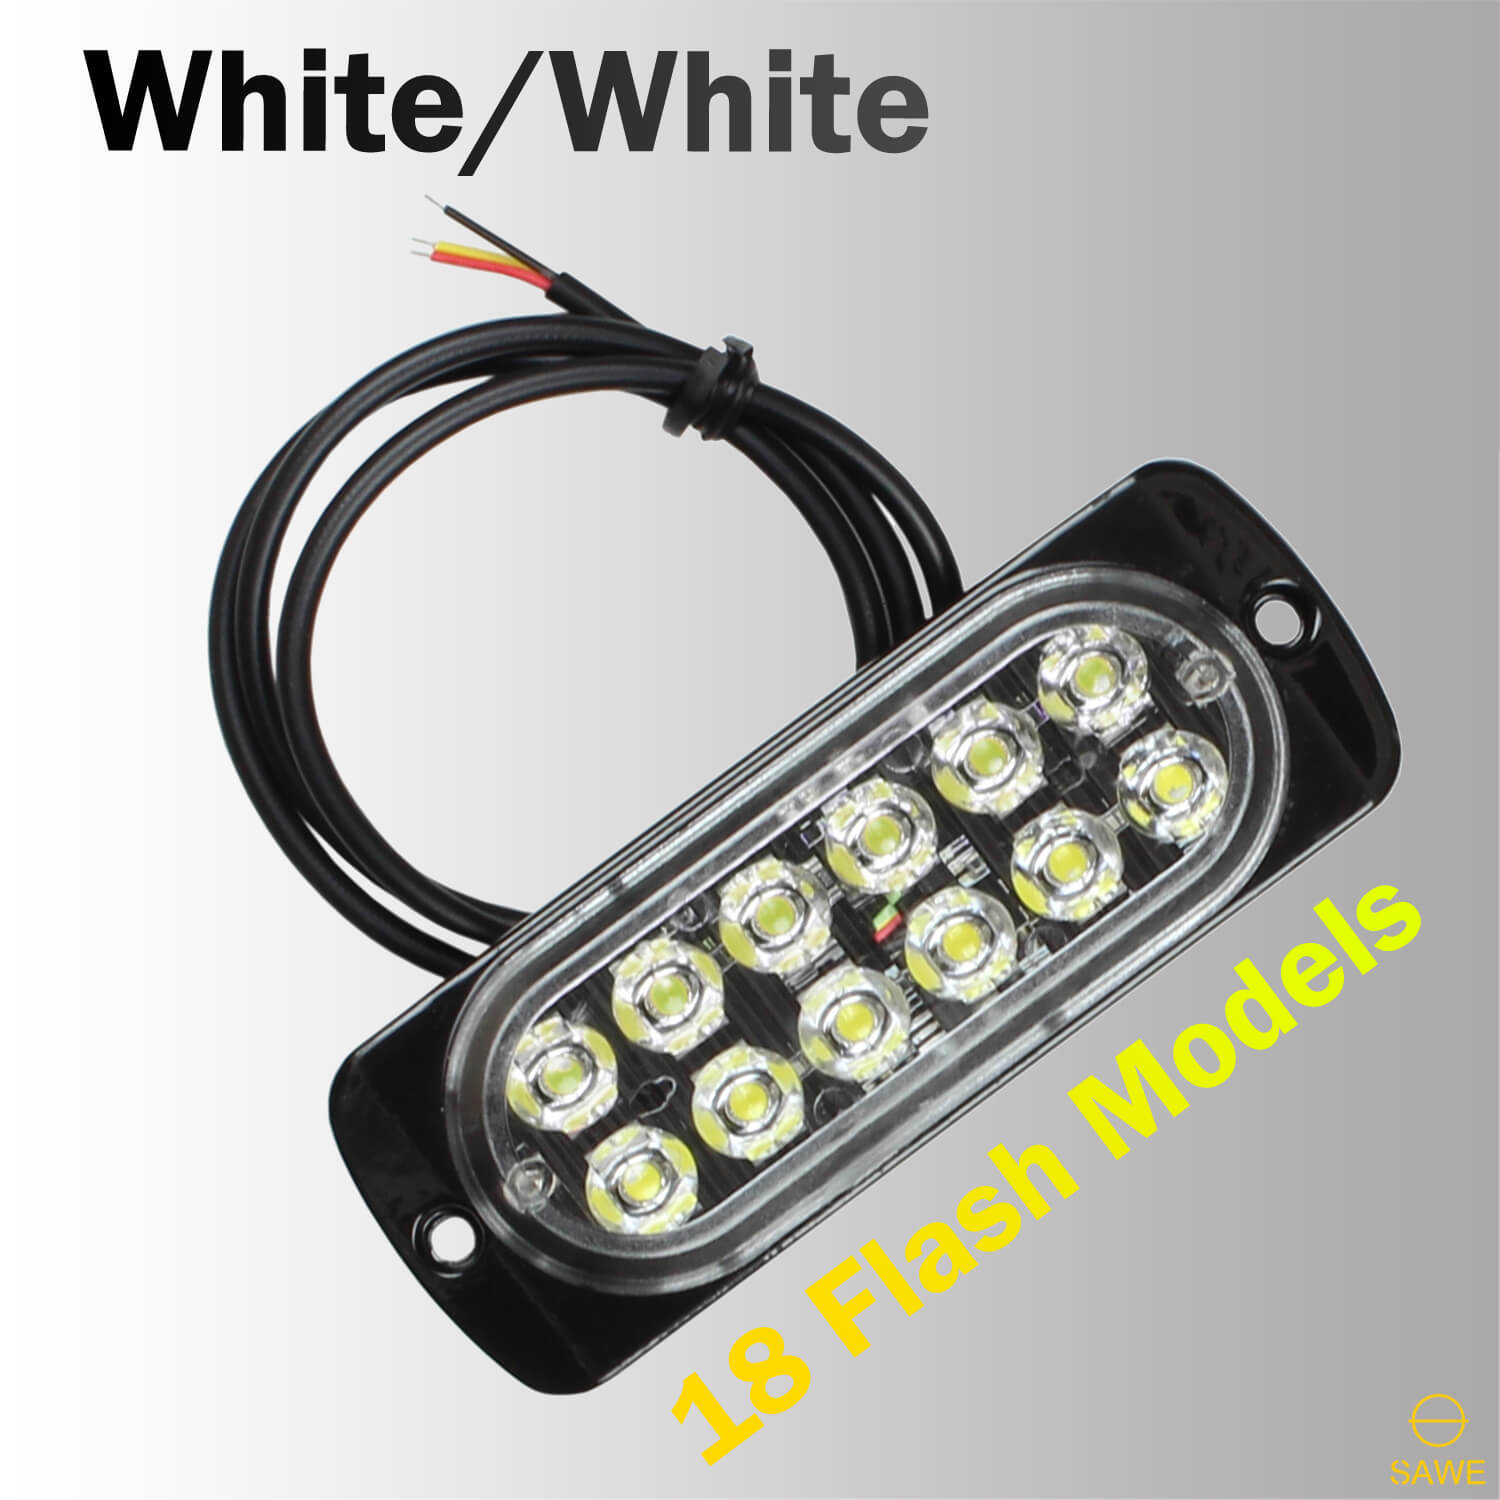 Emergency LED Strobe Lights Bar for Offroad Car Truck Warning Hazard Flash Grille and Surface Mount Light - White 12-LED